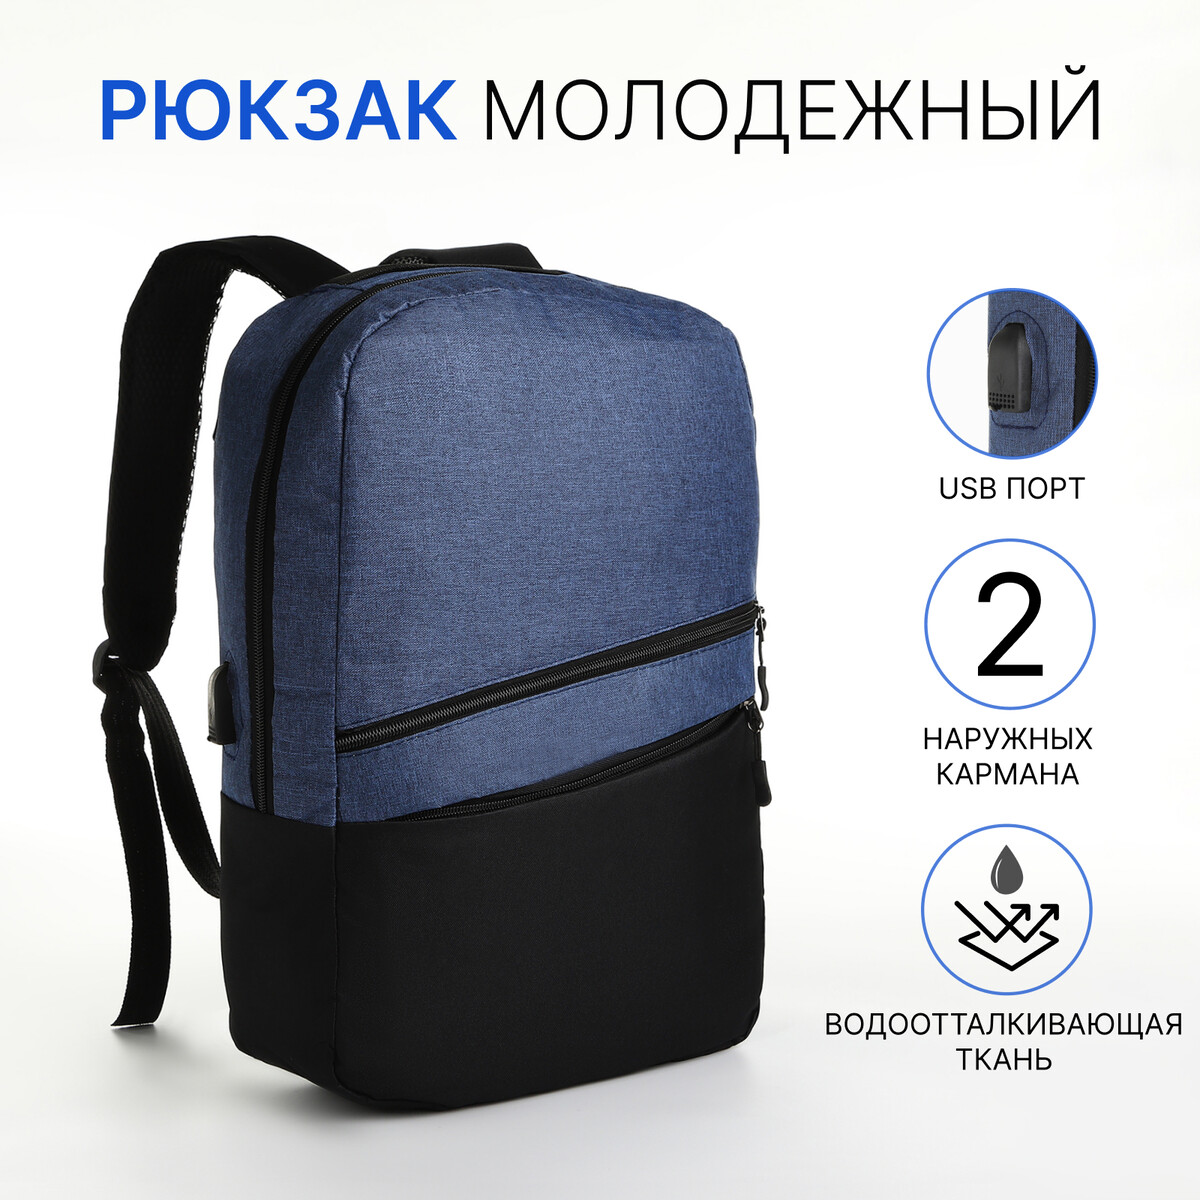 Рюкзак городской с usb из текстиля на молнии, 2 кармана, цвет черный/синий рюкзак городской из текстиля на молнии 4 кармана